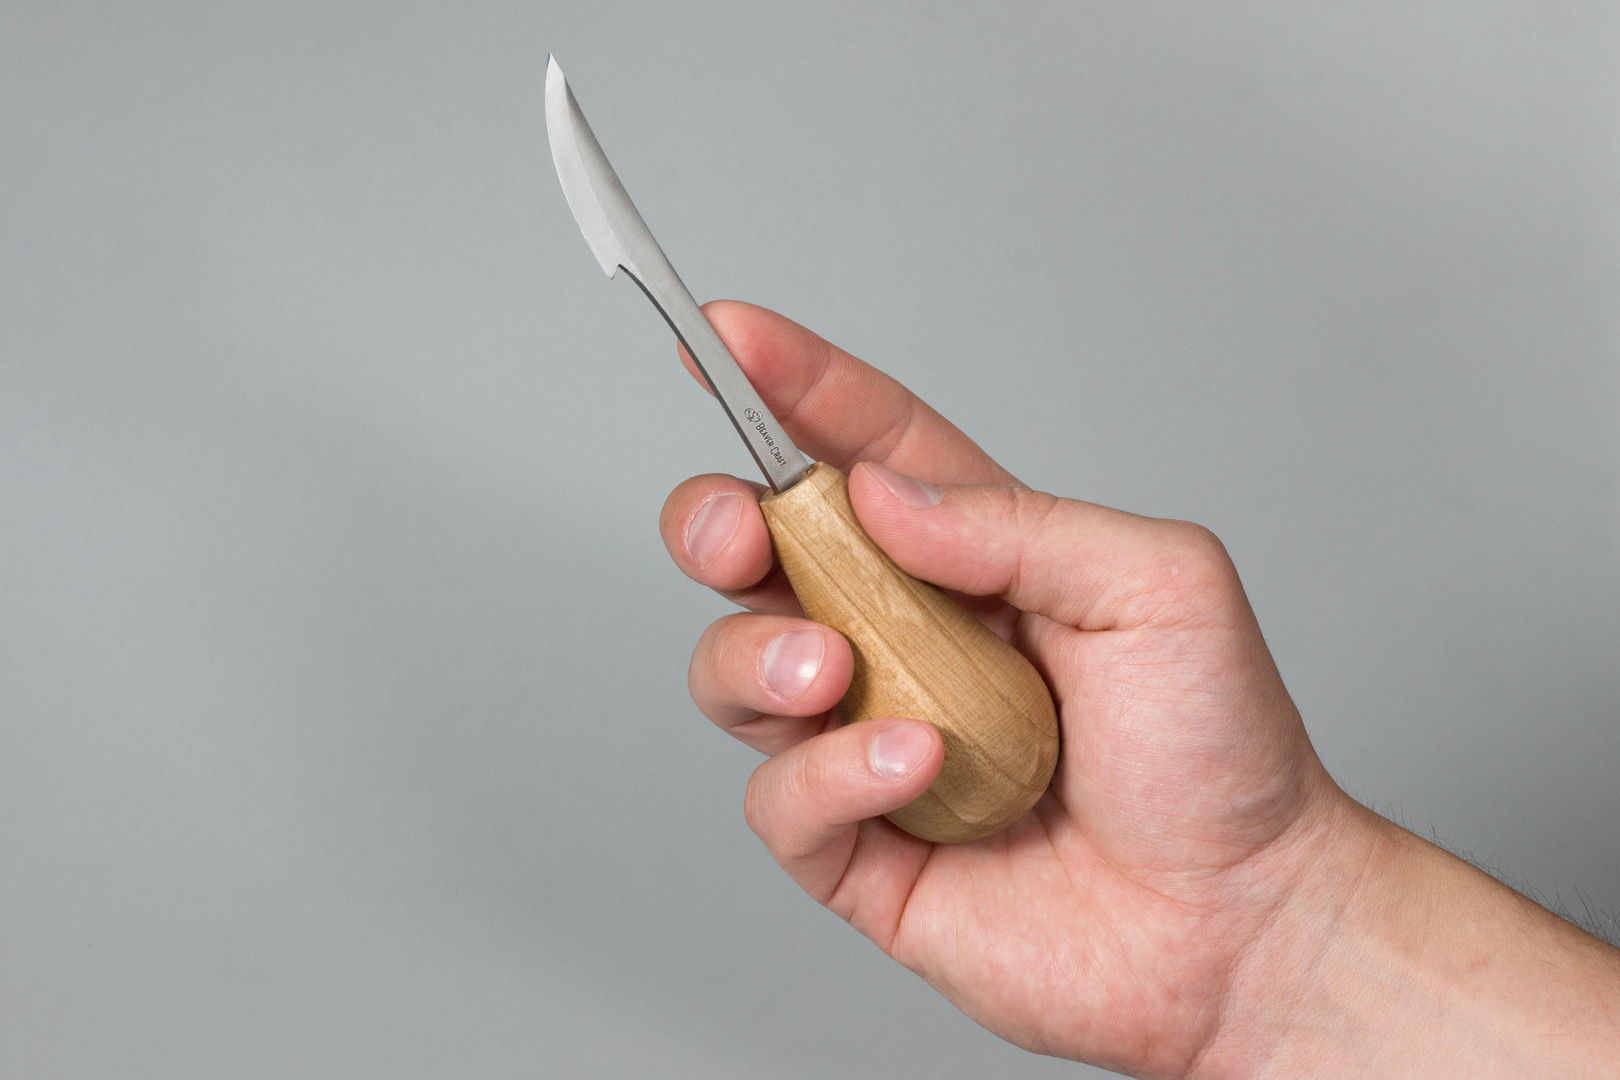 Wood Carving Whittling Knife BeaverCraft C17P Whittling Tools Wood